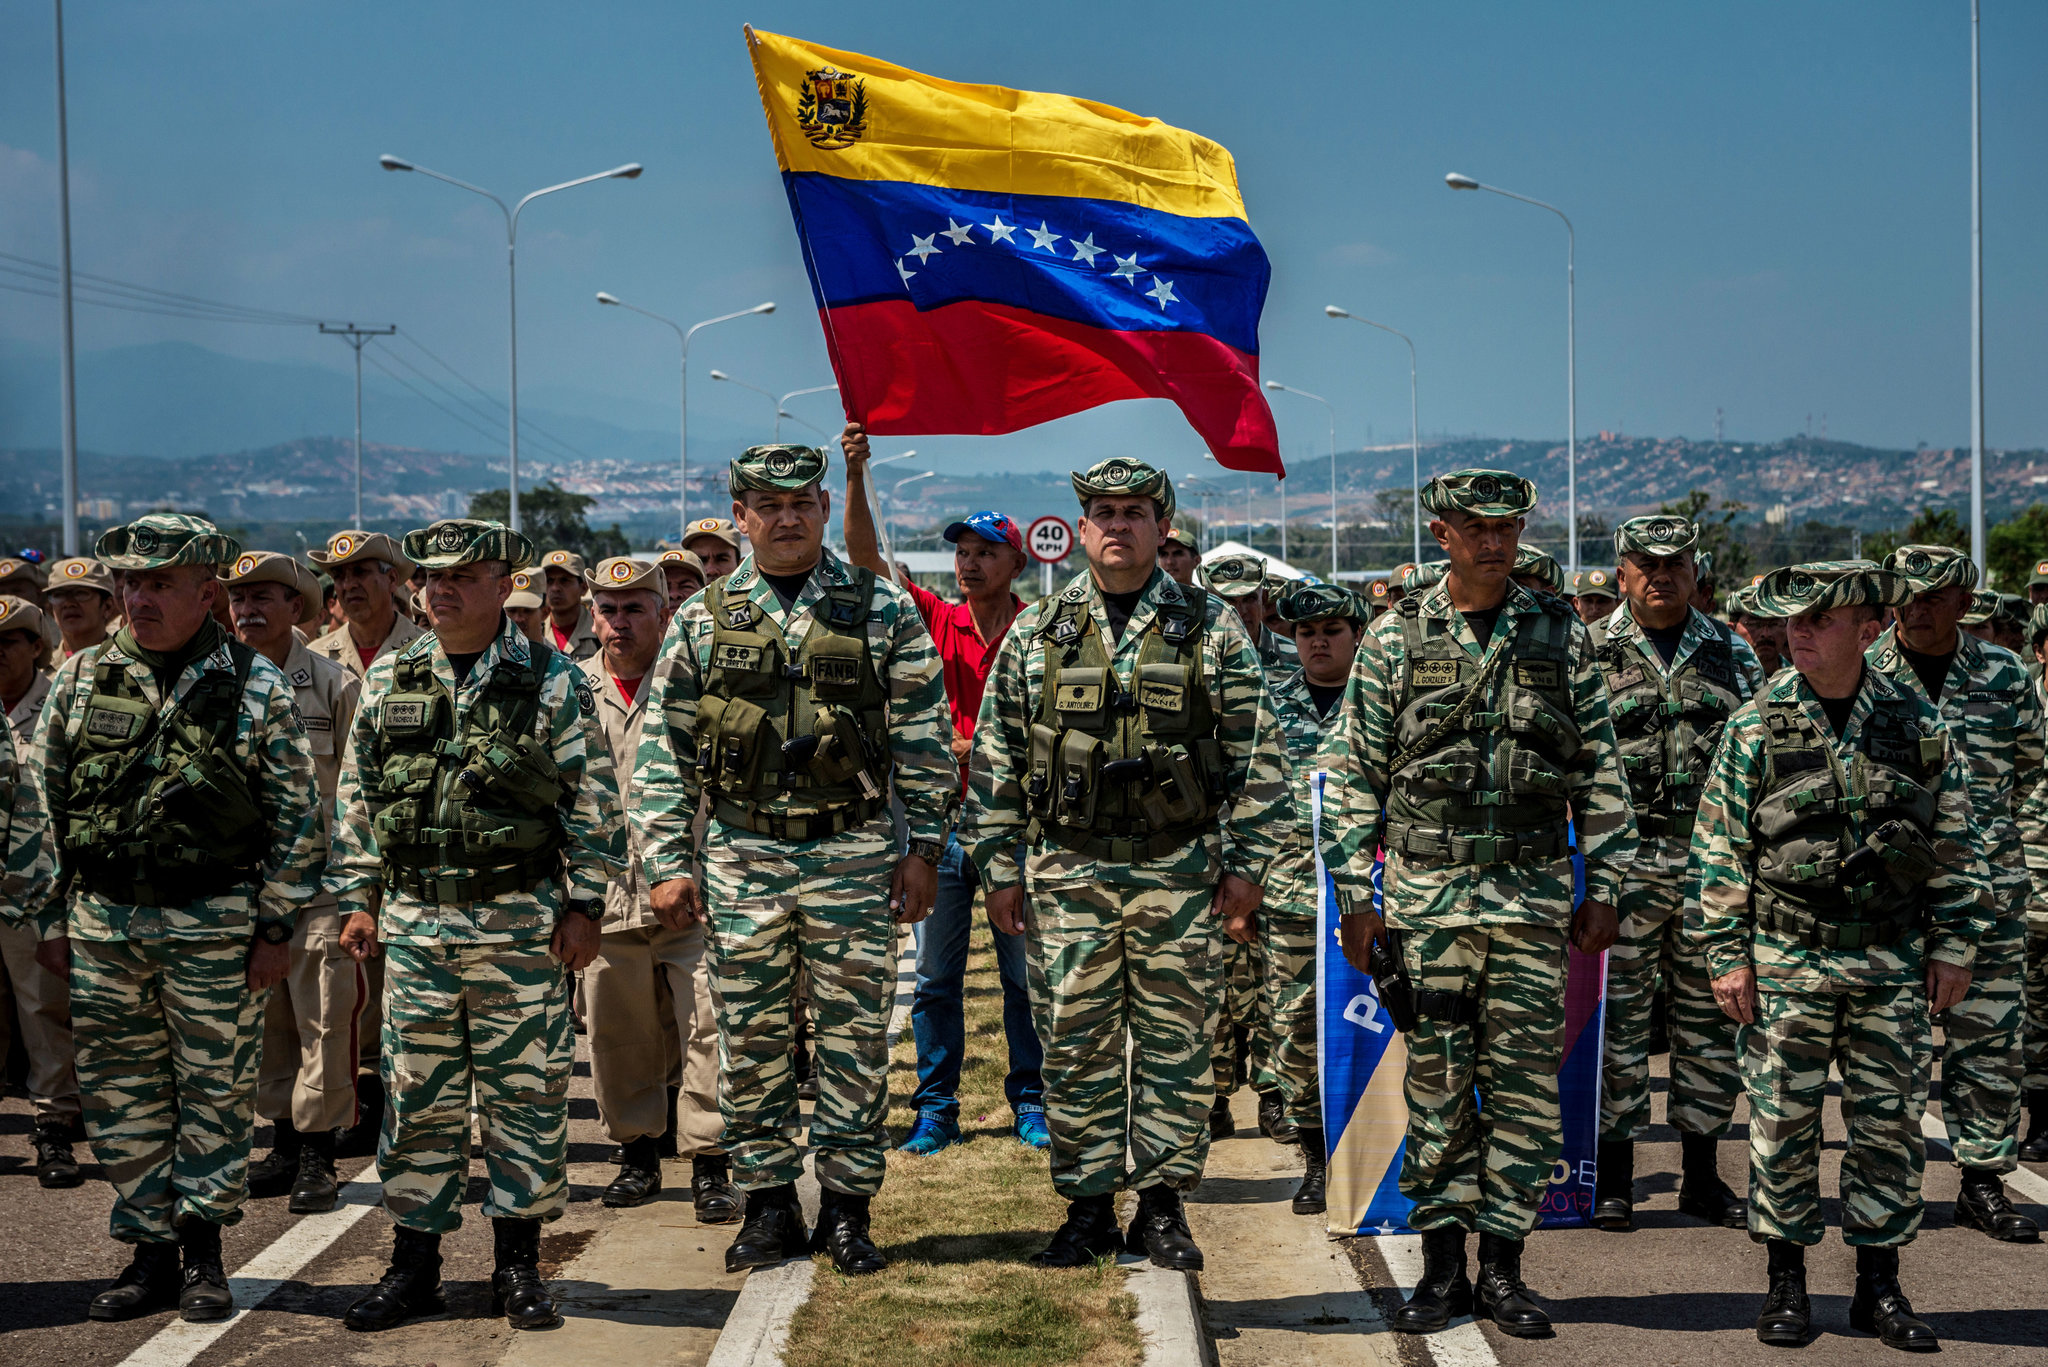 Esercito venezuelano